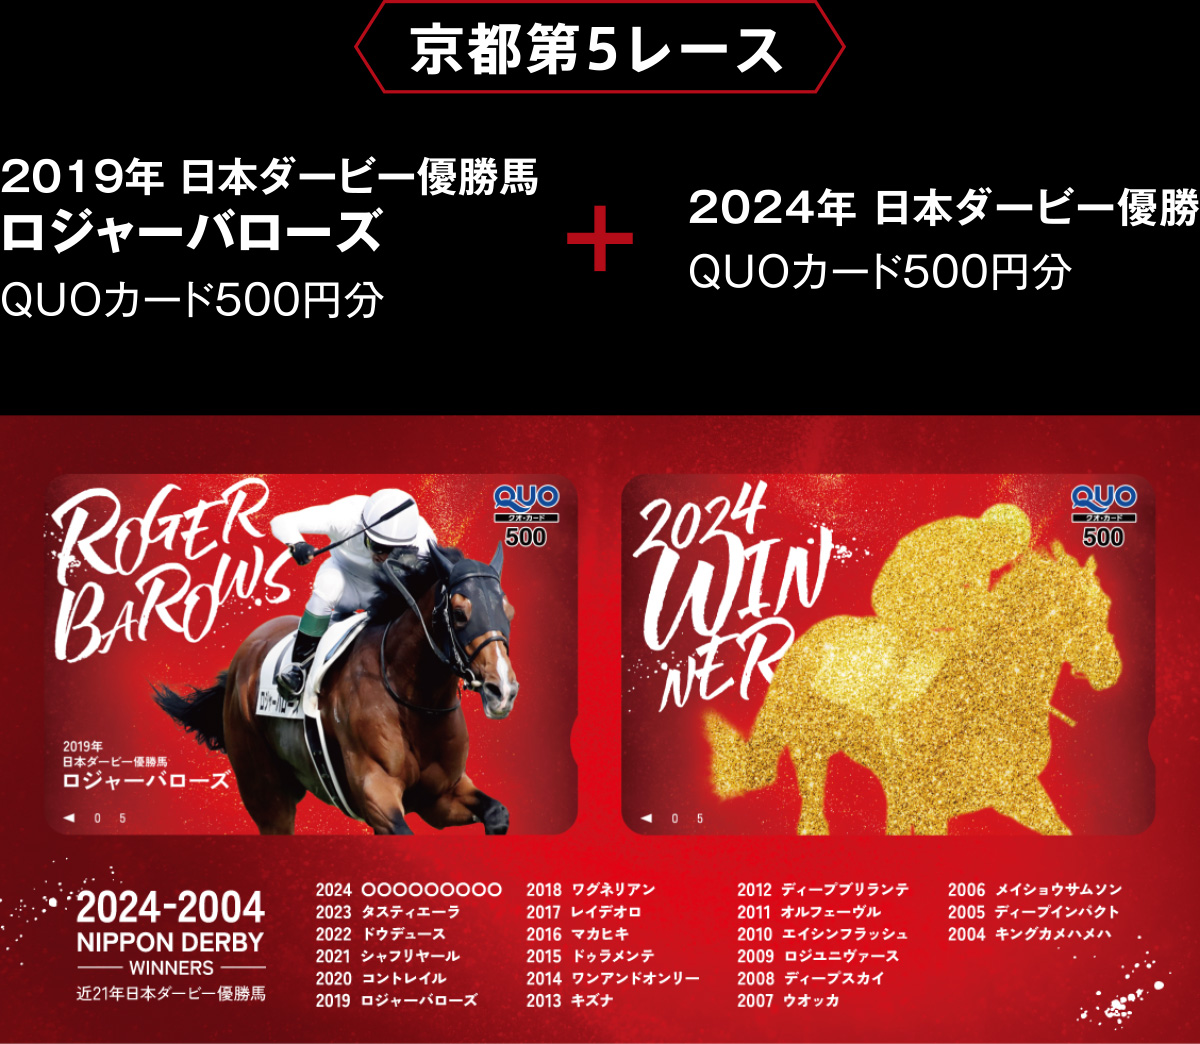 B-クオカード・日本ダービー第80回記念メモリーカード (キズナ・ ワカタカ・ダービー馬6頭 計3枚)